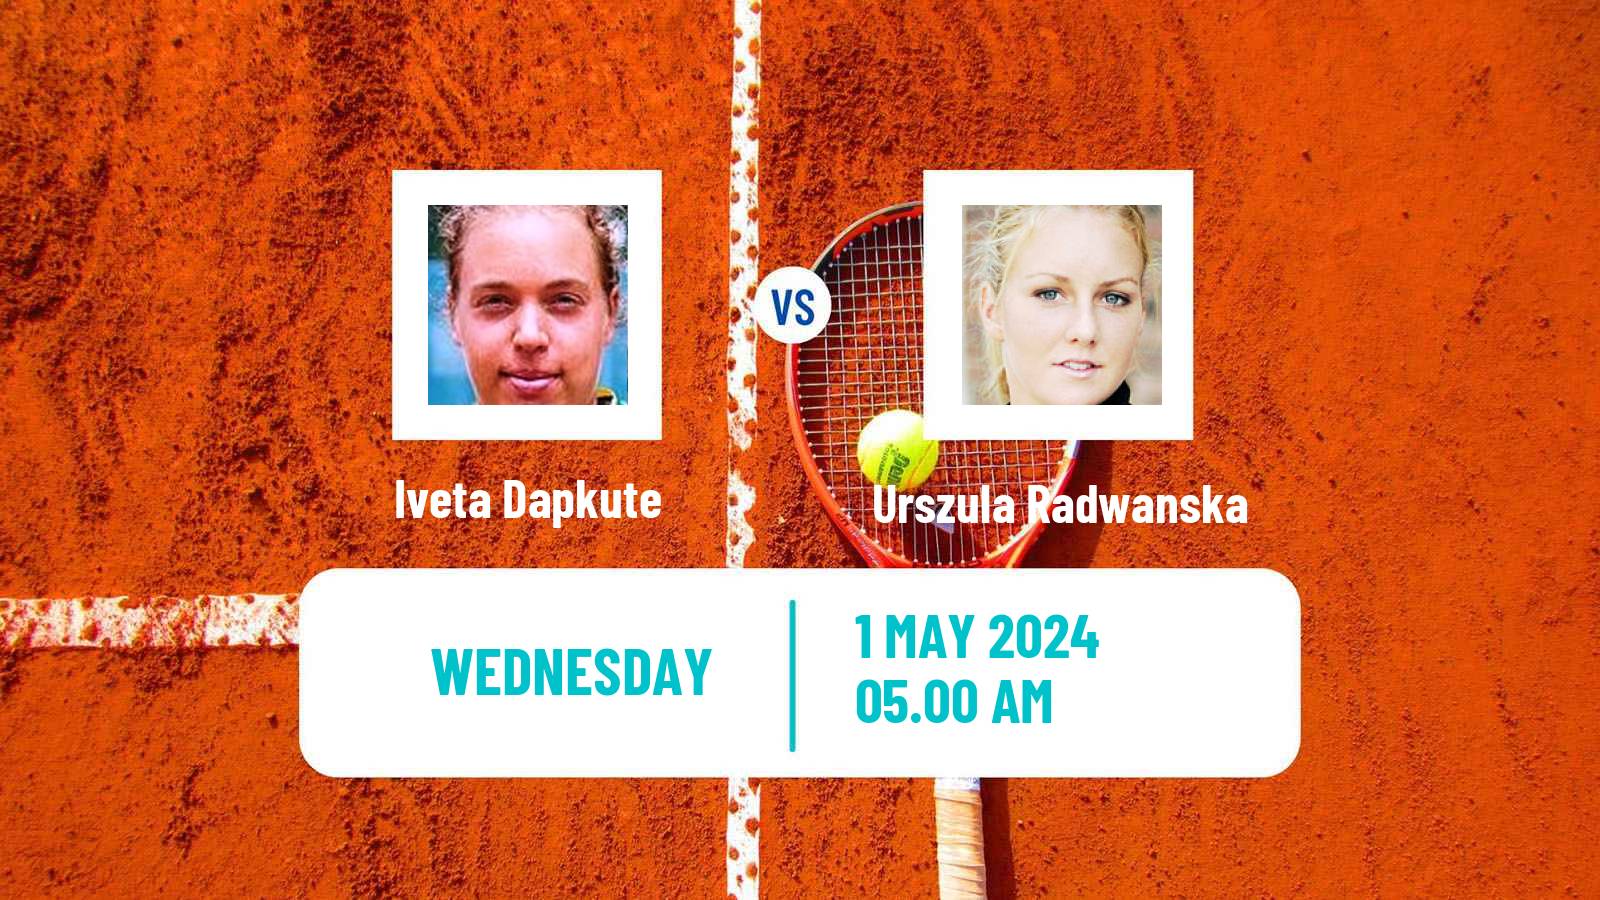 Tennis ITF W50 Lopota 2 Women Iveta Dapkute - Urszula Radwanska